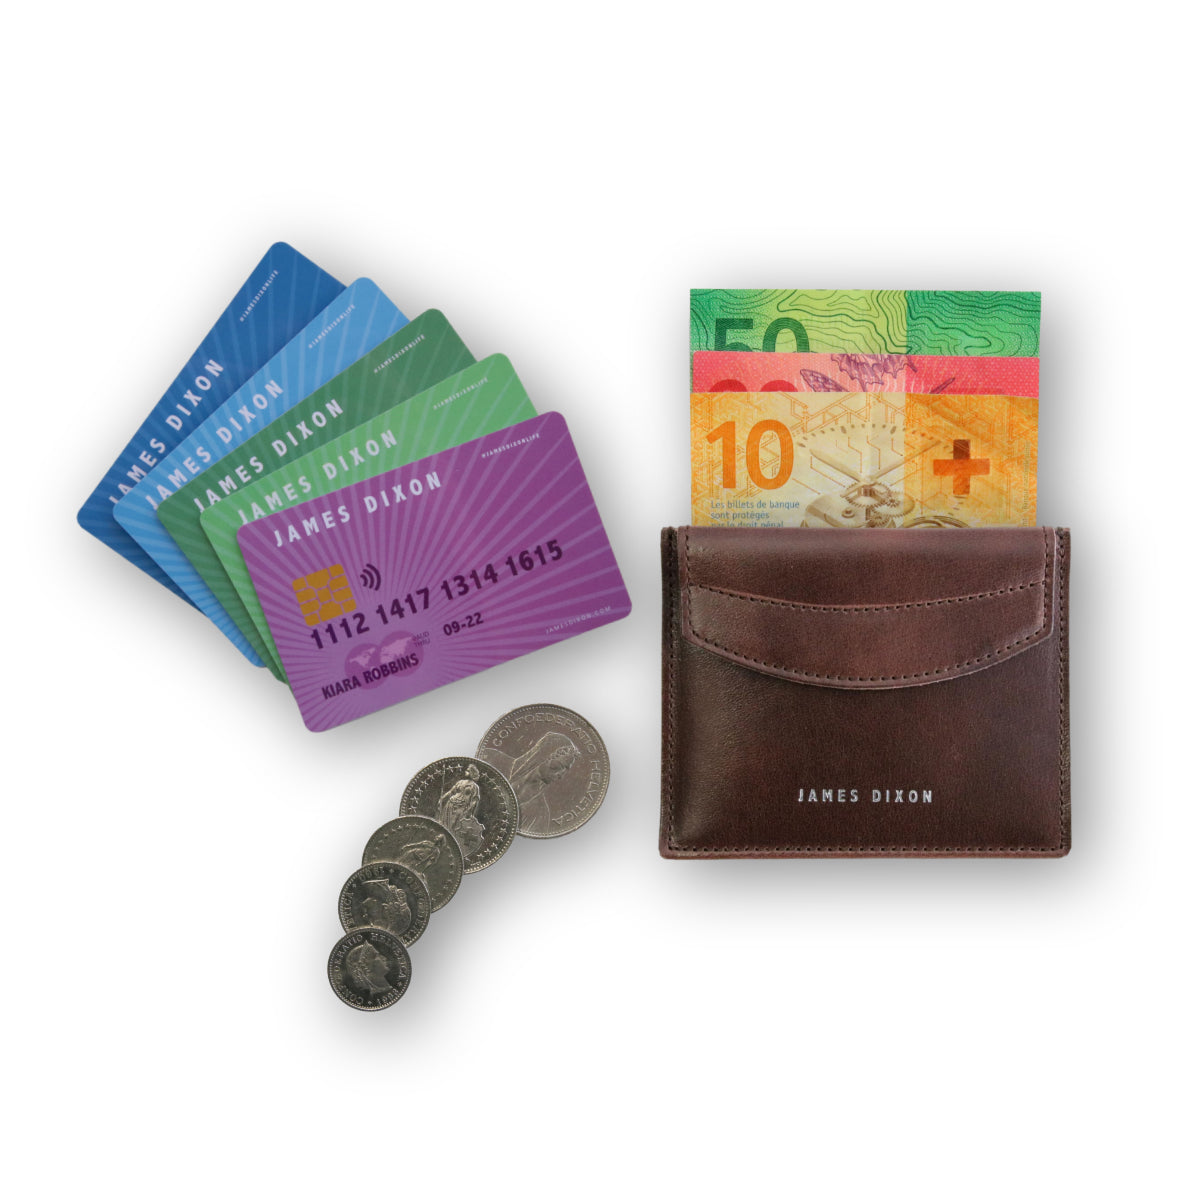 jd0330 james dixon poco classic cacao brown coin pocket wallet content